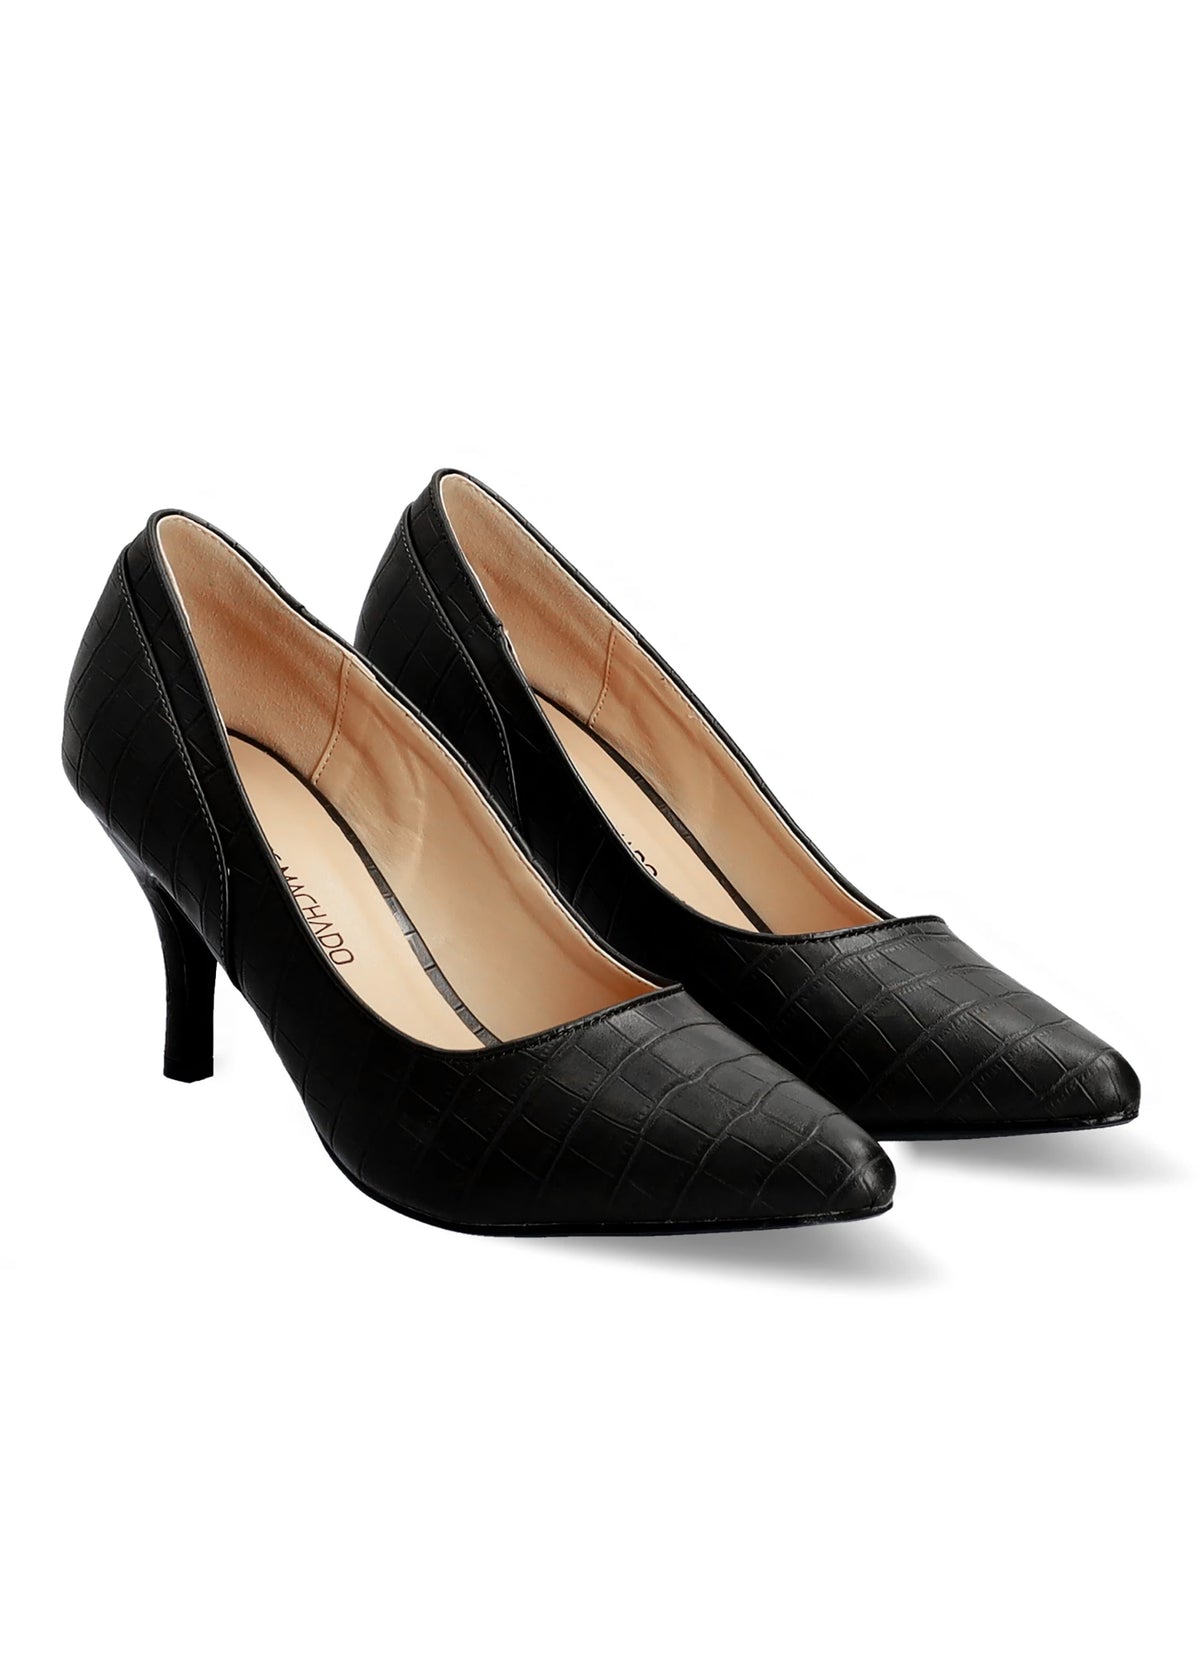 High heels - black, crocodile pattern surface